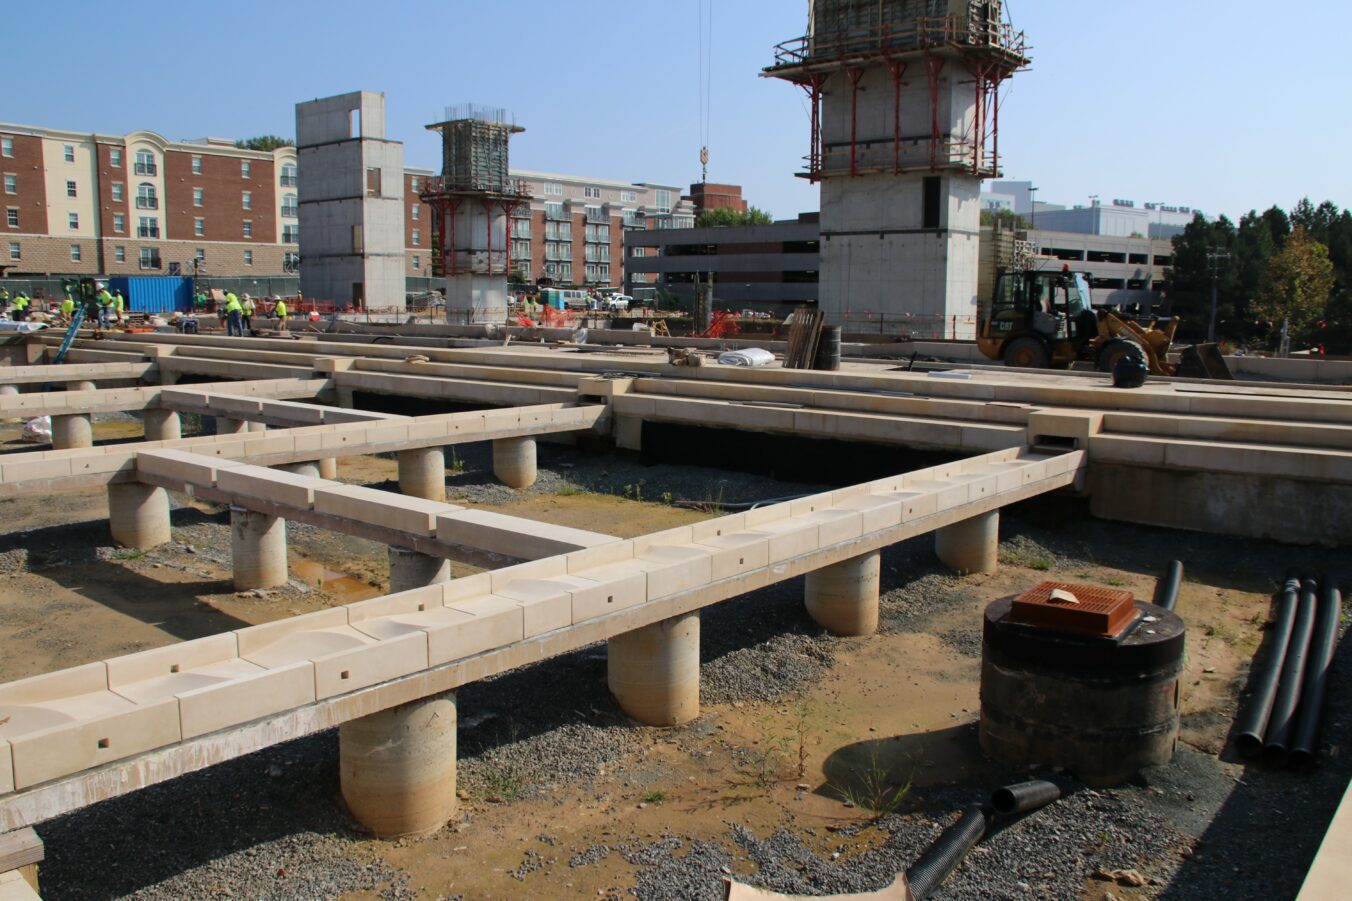 University of Virginia Infrastructure Project In Progress